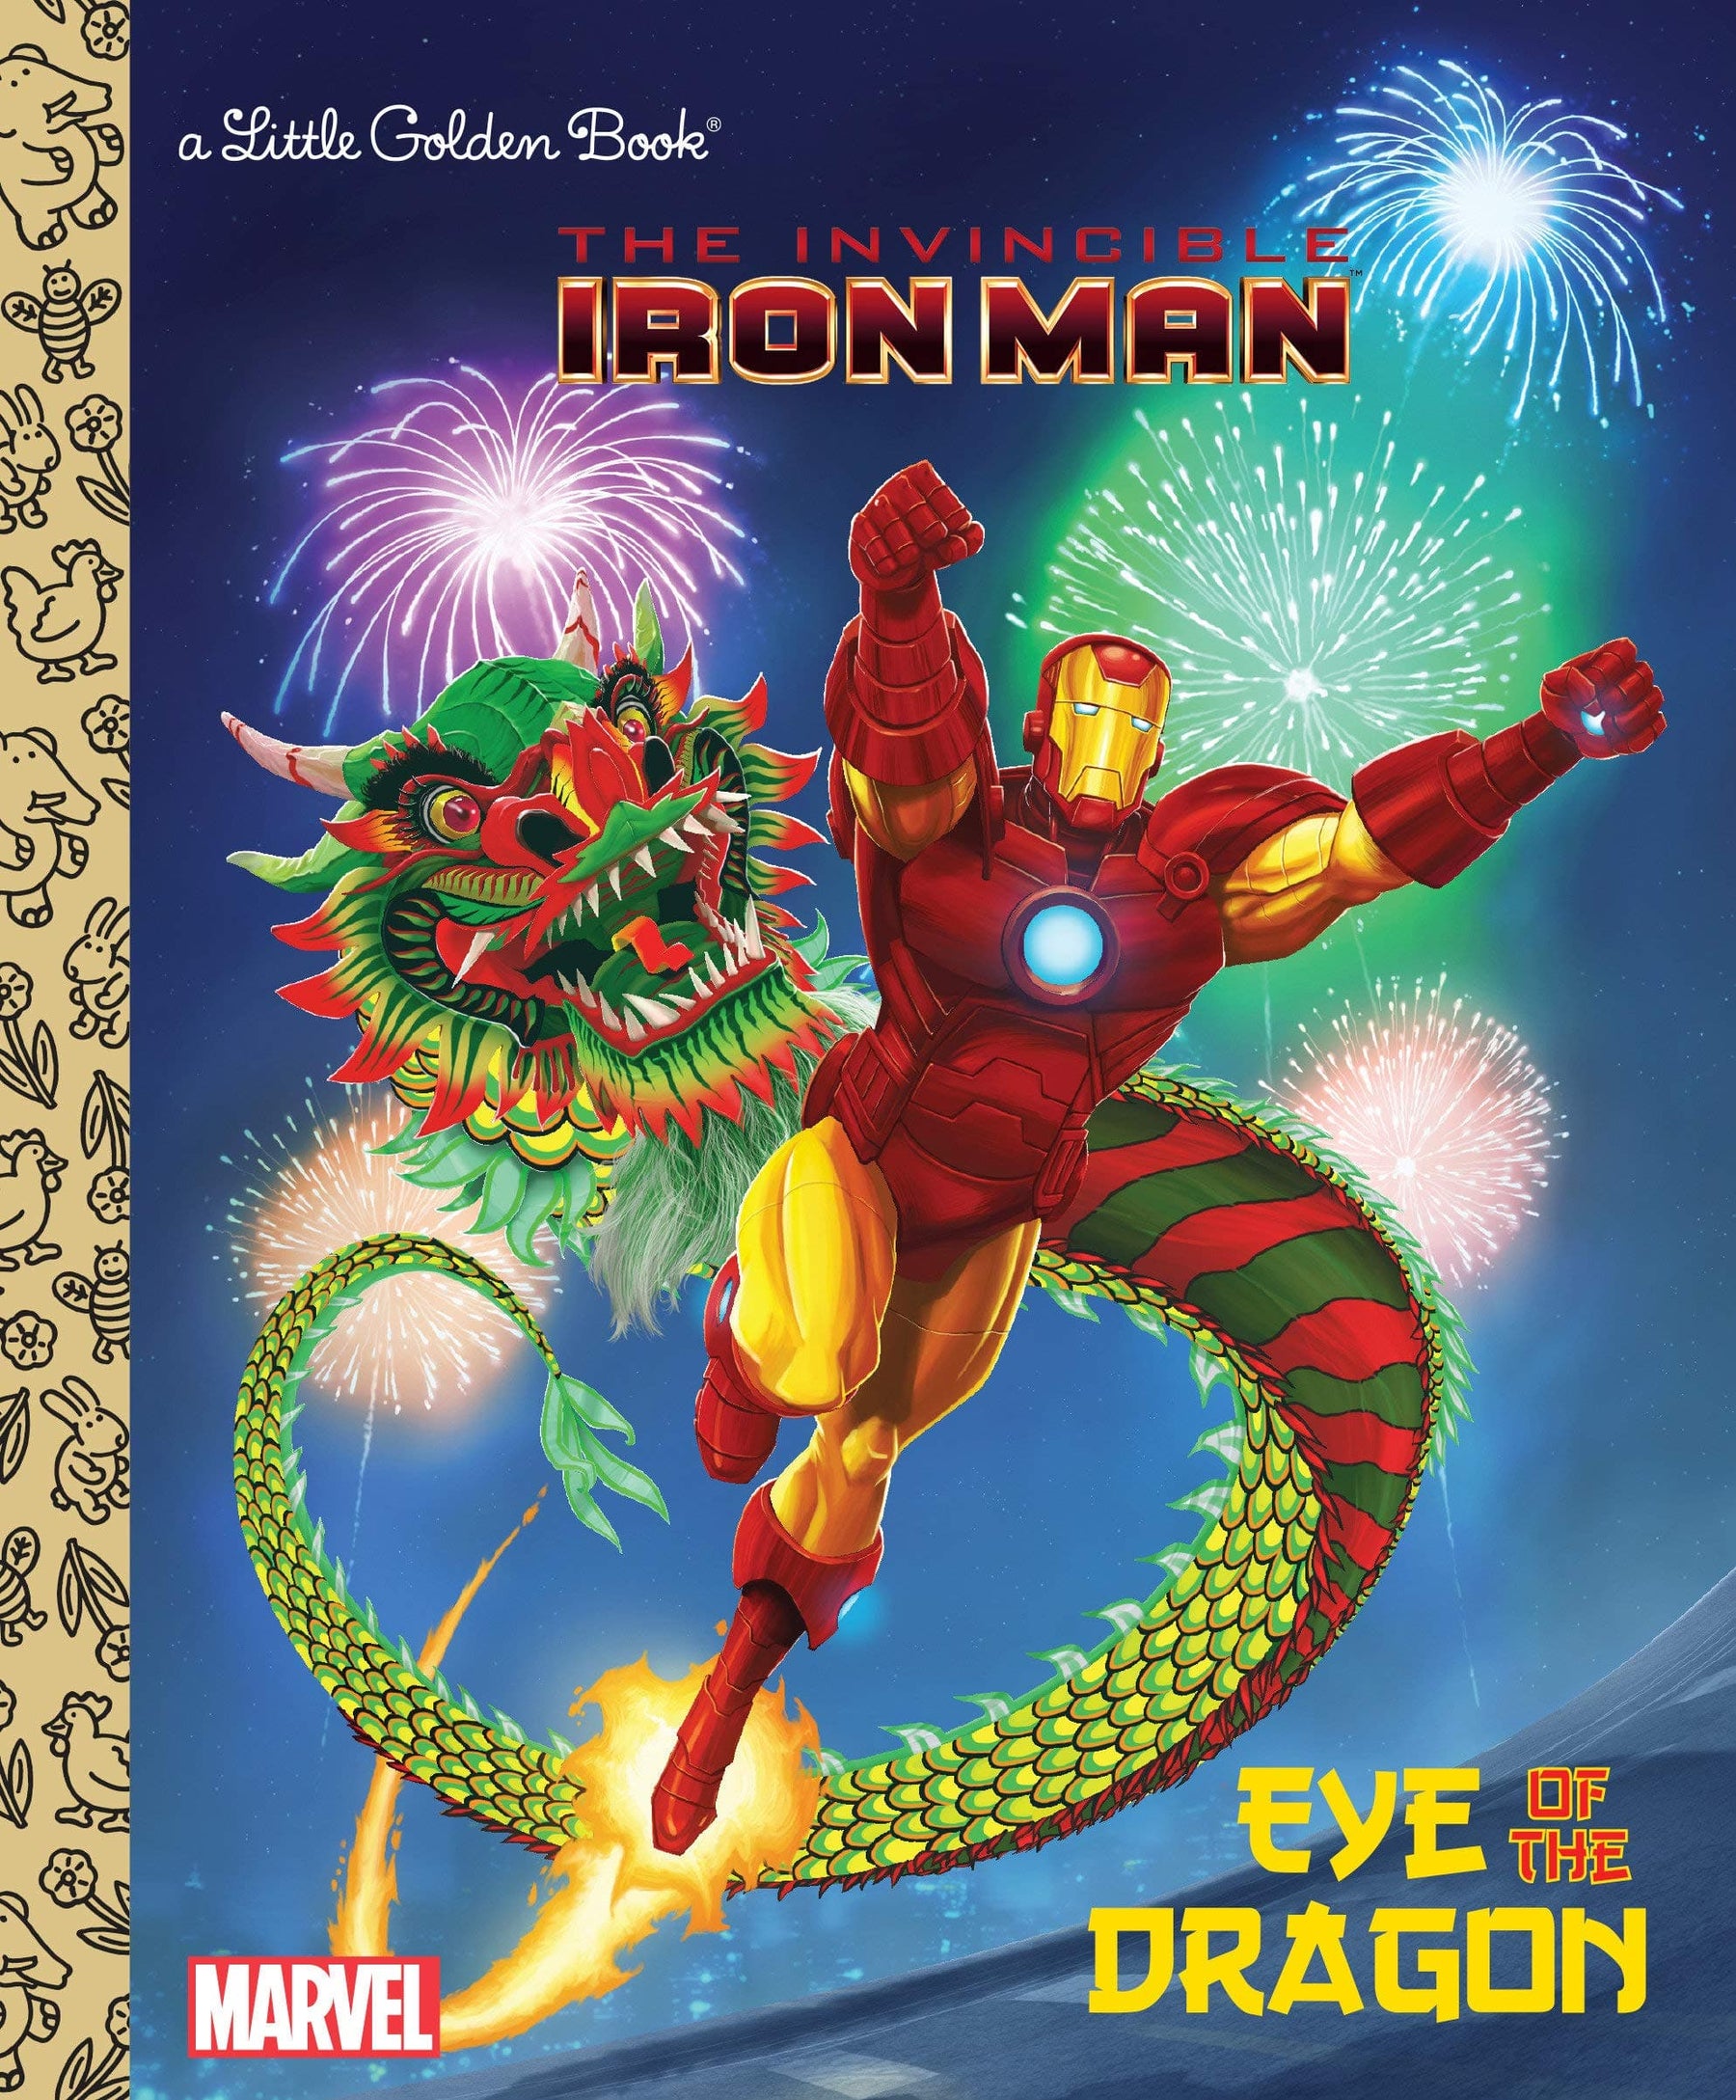 Little Golden Book: Marvel - Iron Man, Eye of the Dragon - Third Eye